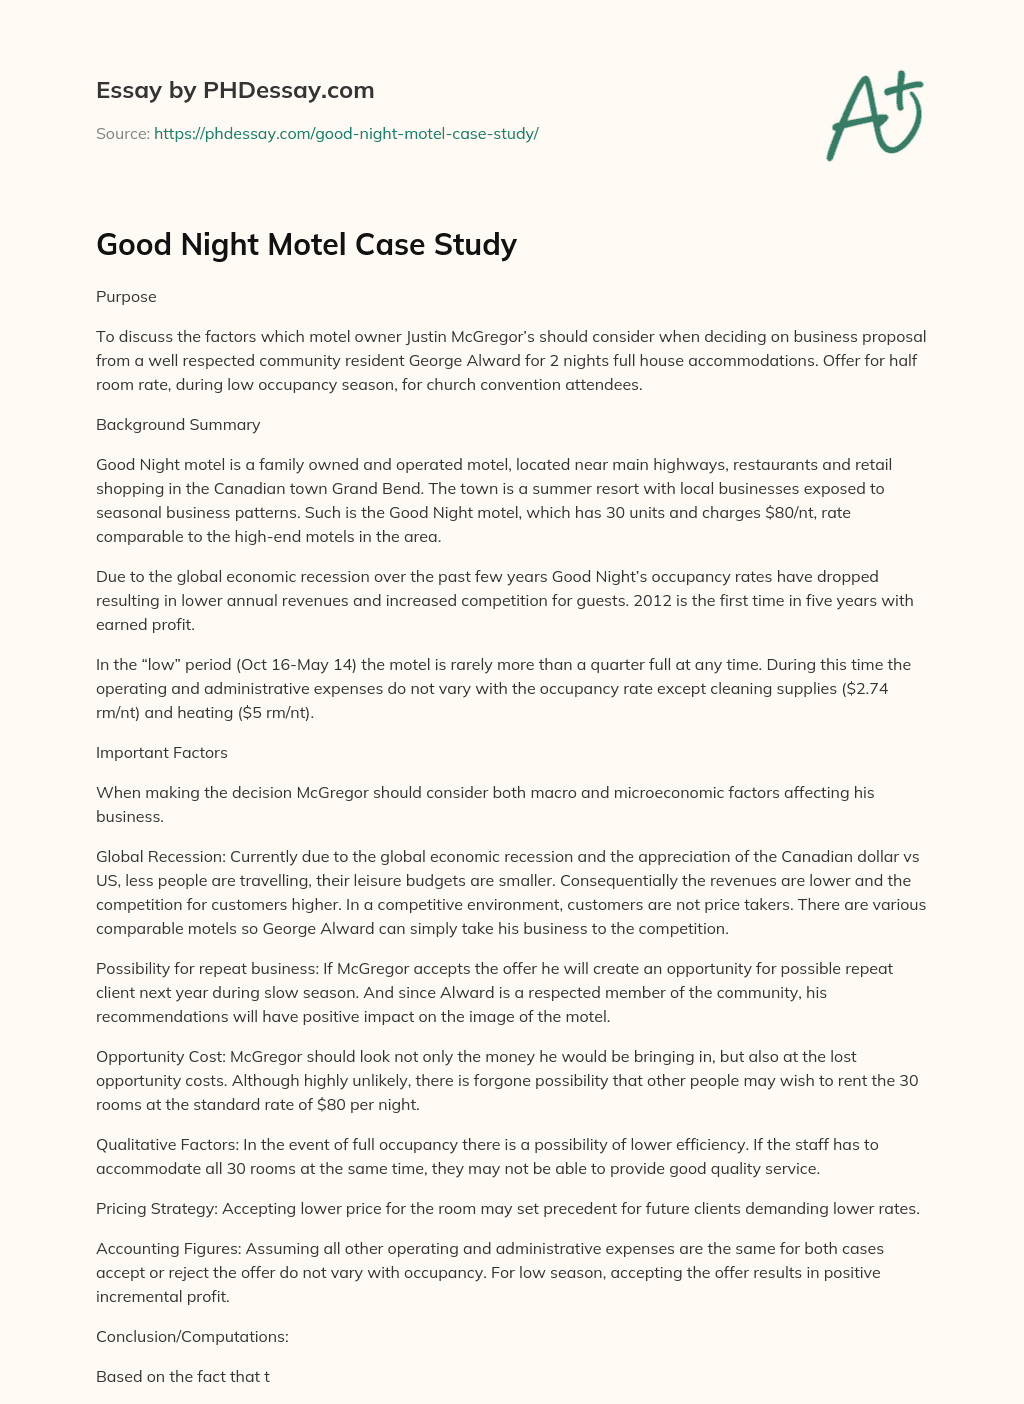 Good Night Motel Сase Study essay